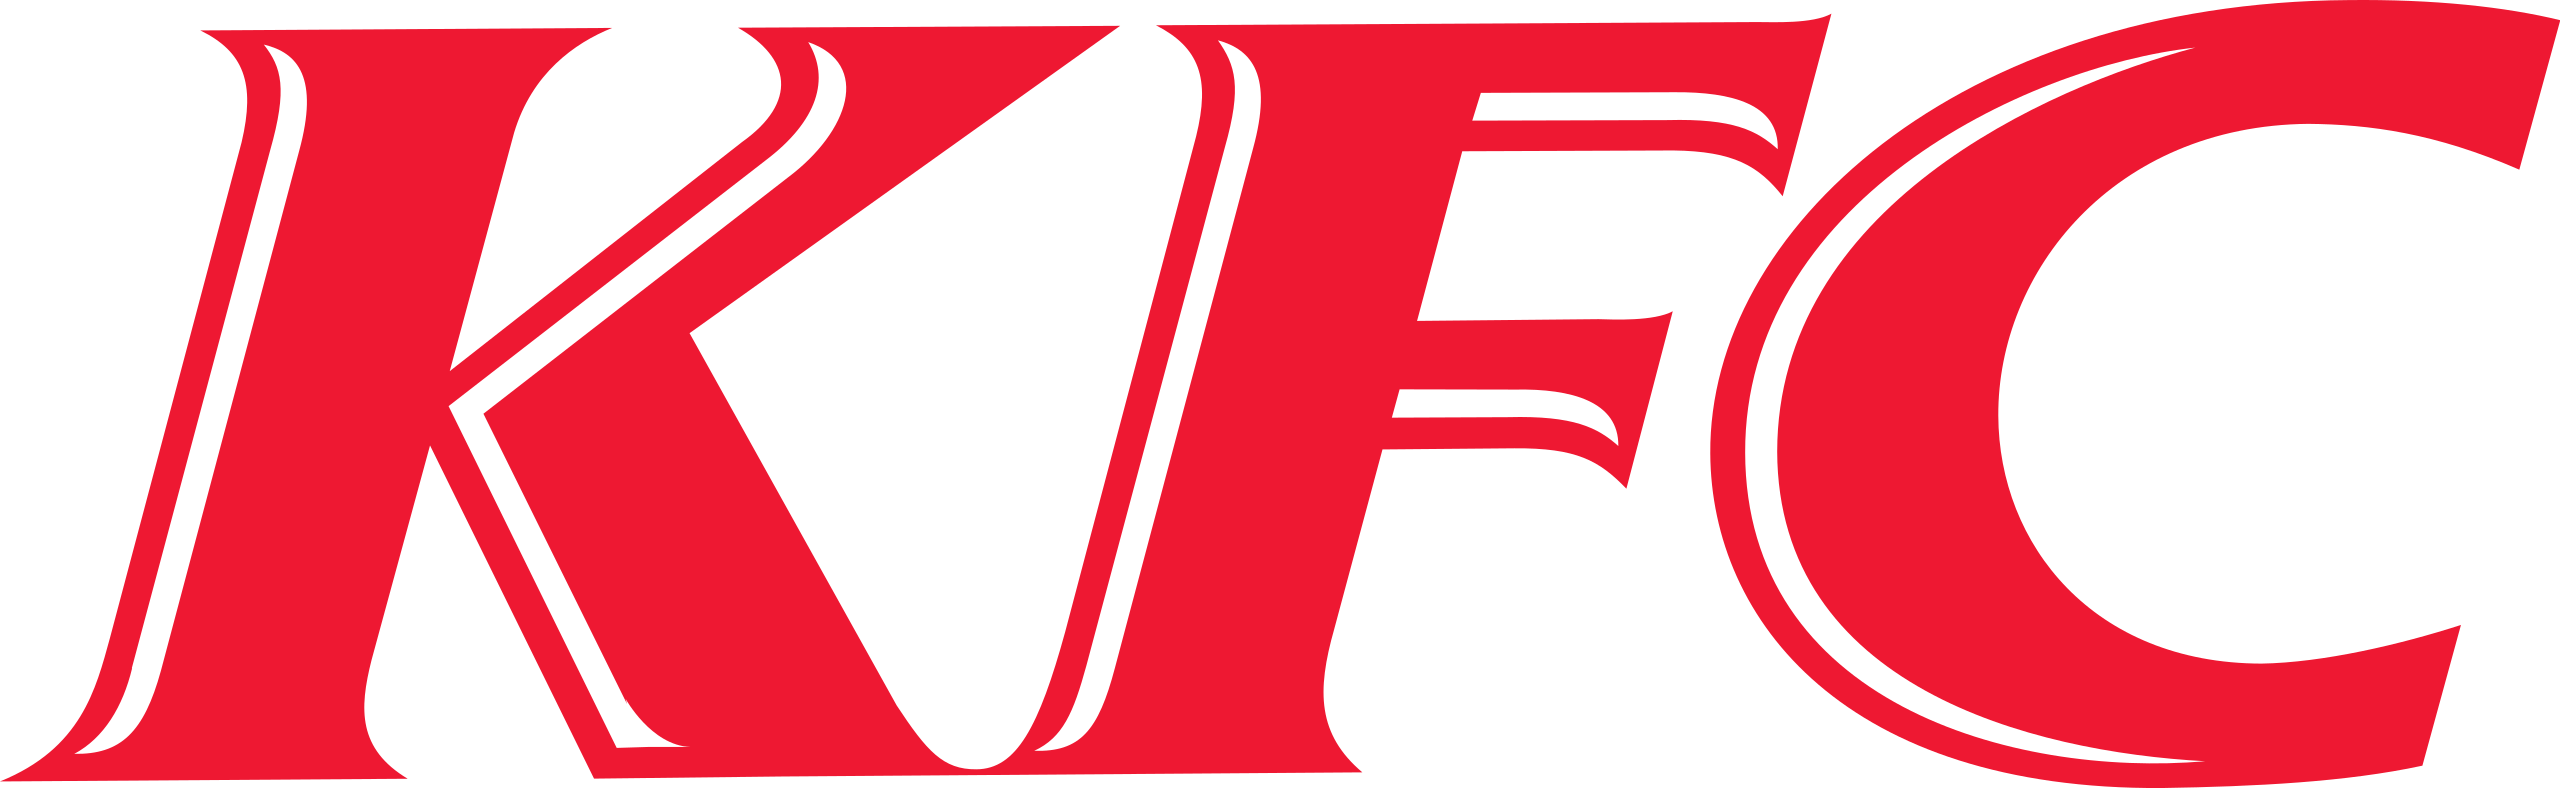 File:KFC Logo.svg - Wikimedia Commons